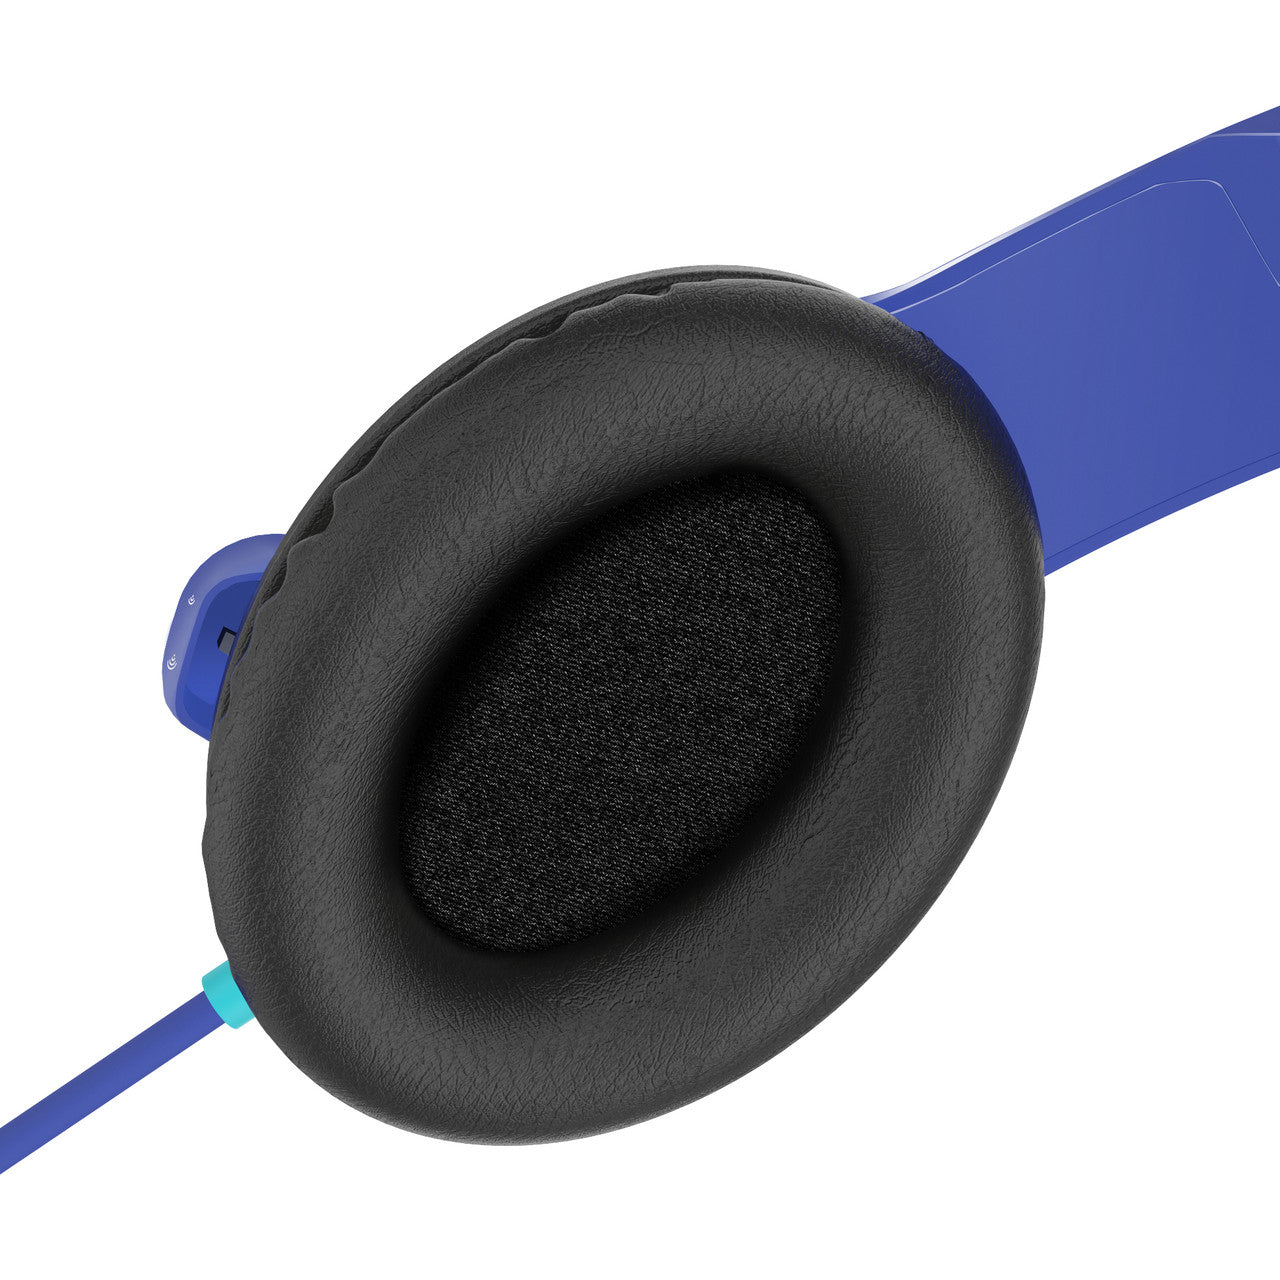 Image of KidJamz KJ35 Safe Listening Headphones for Kids with Inline Microphone.